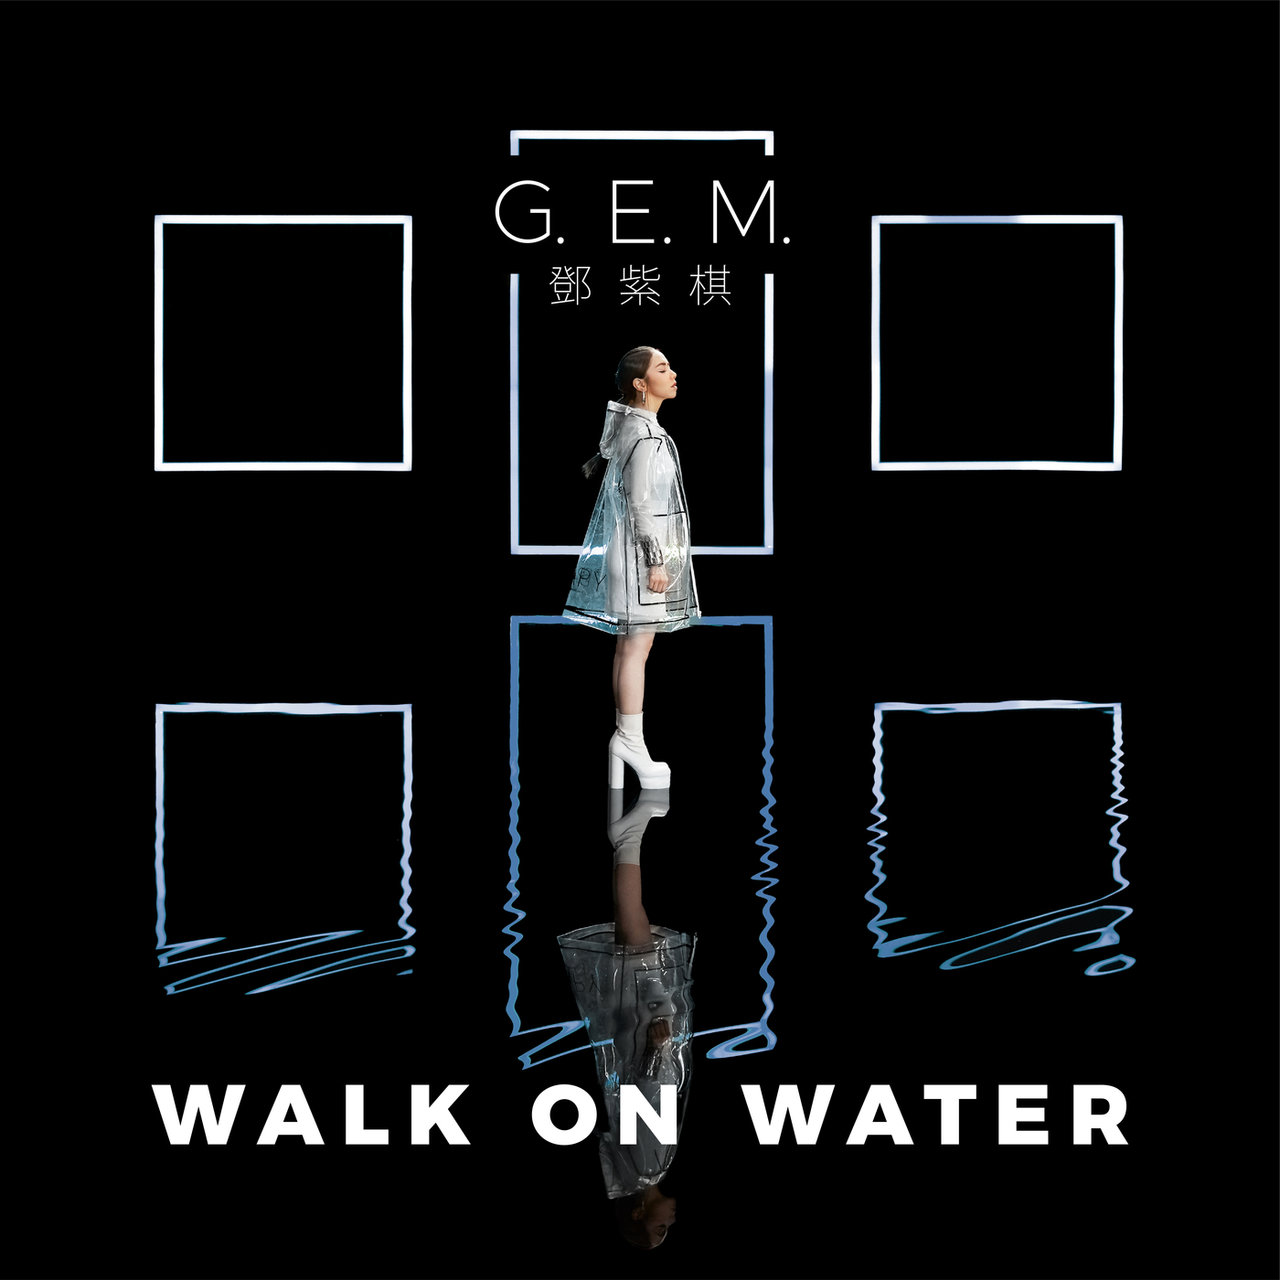 G.E.M. WALK ON WATER cover artwork